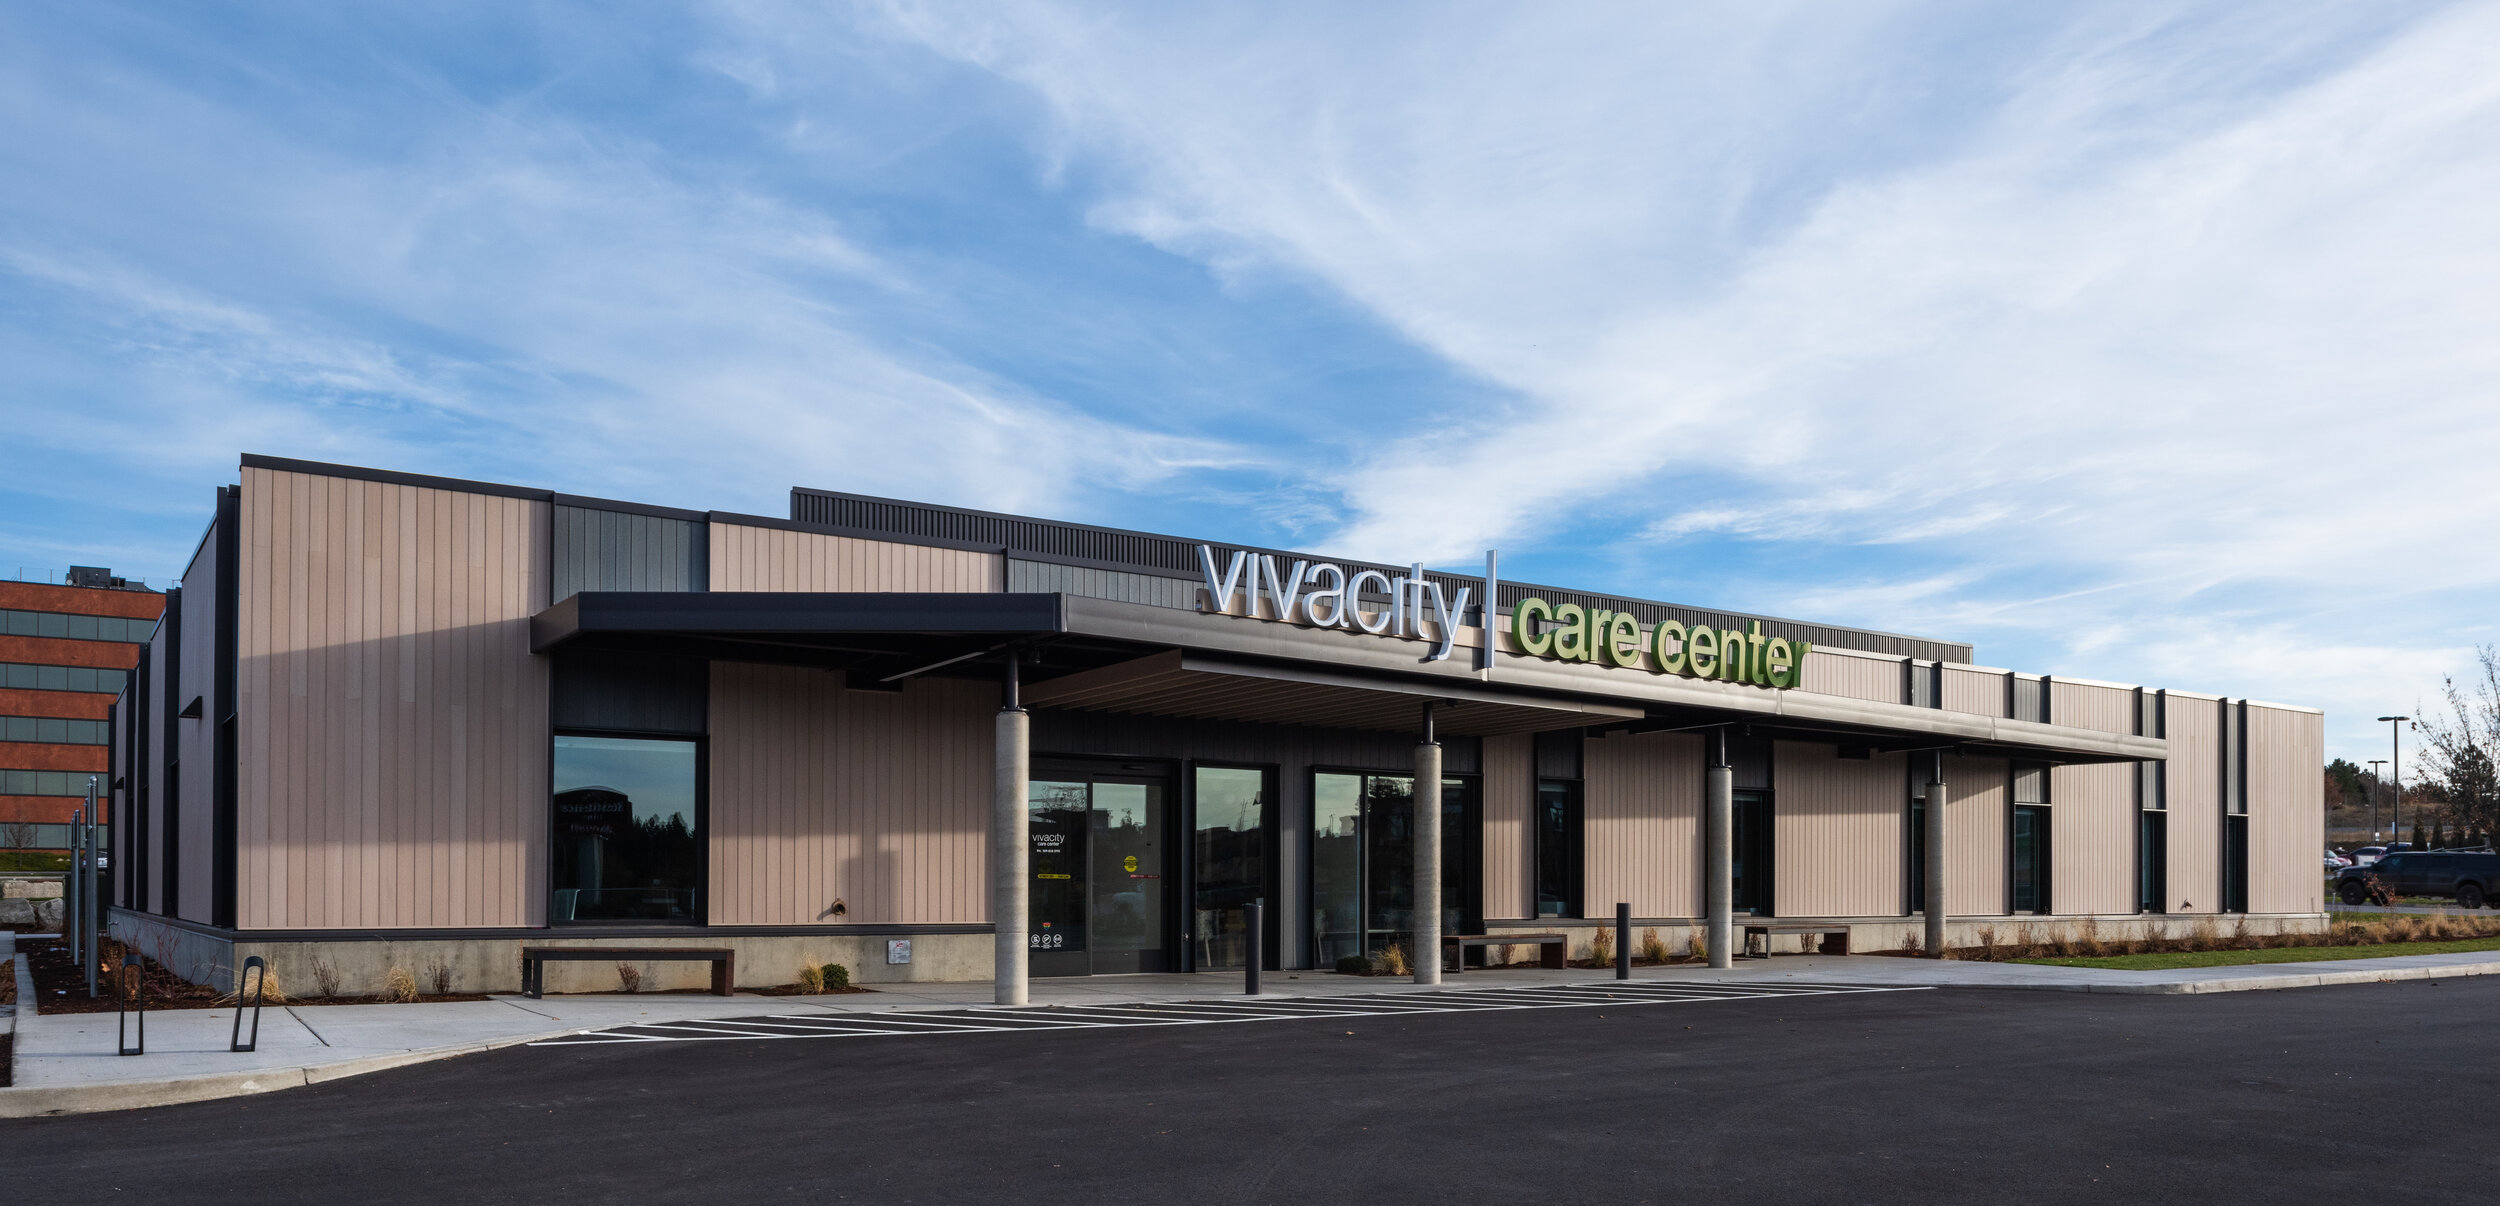 valley-vivacity-exterior-hi-res-4.jpg